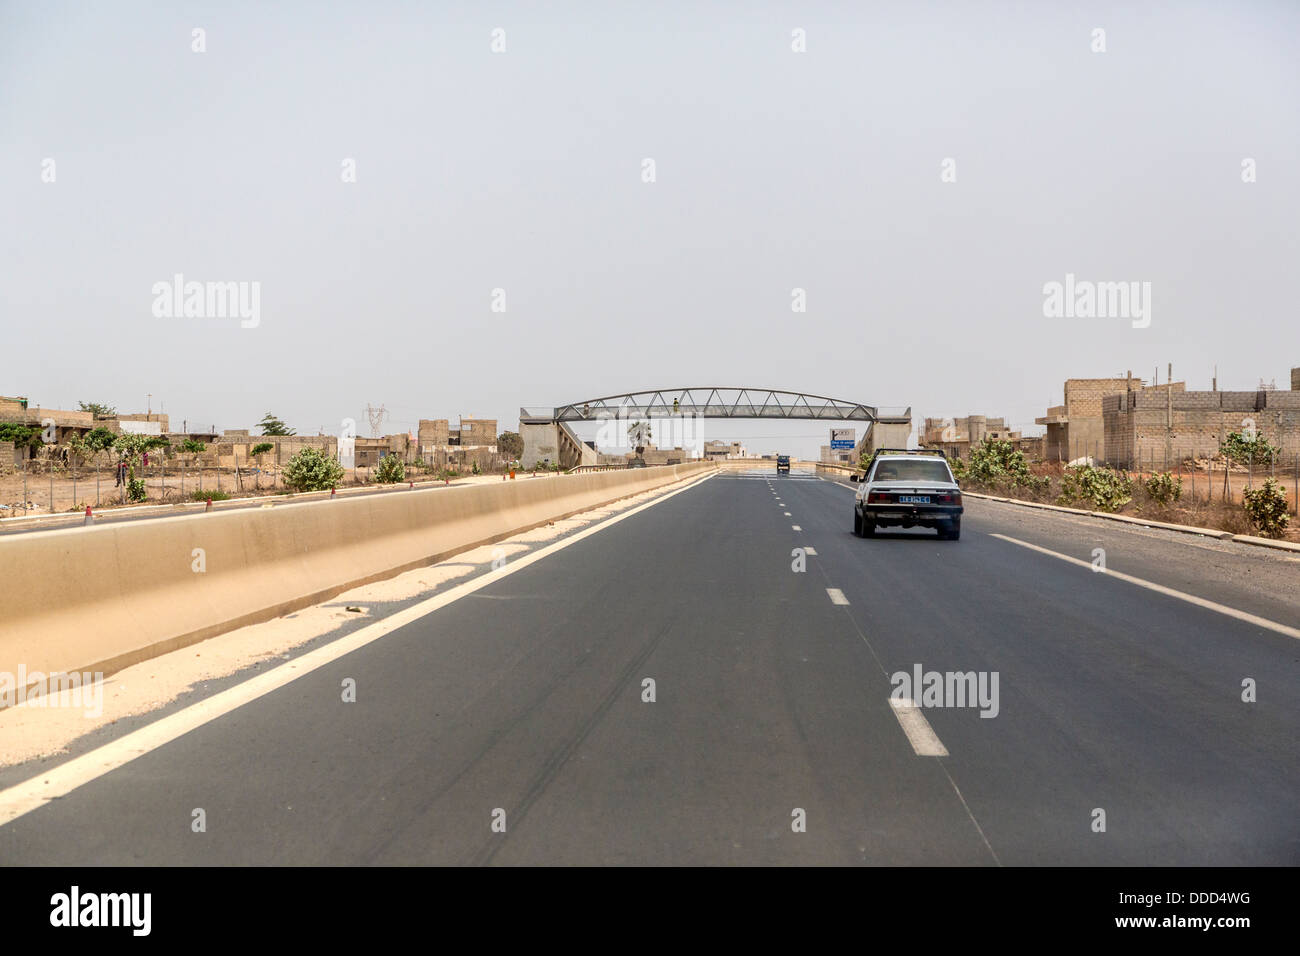 Modern Four-lane Divided Highway near Dakar, Senegal. Pedestrian Bridge in Distance. Stock Photo